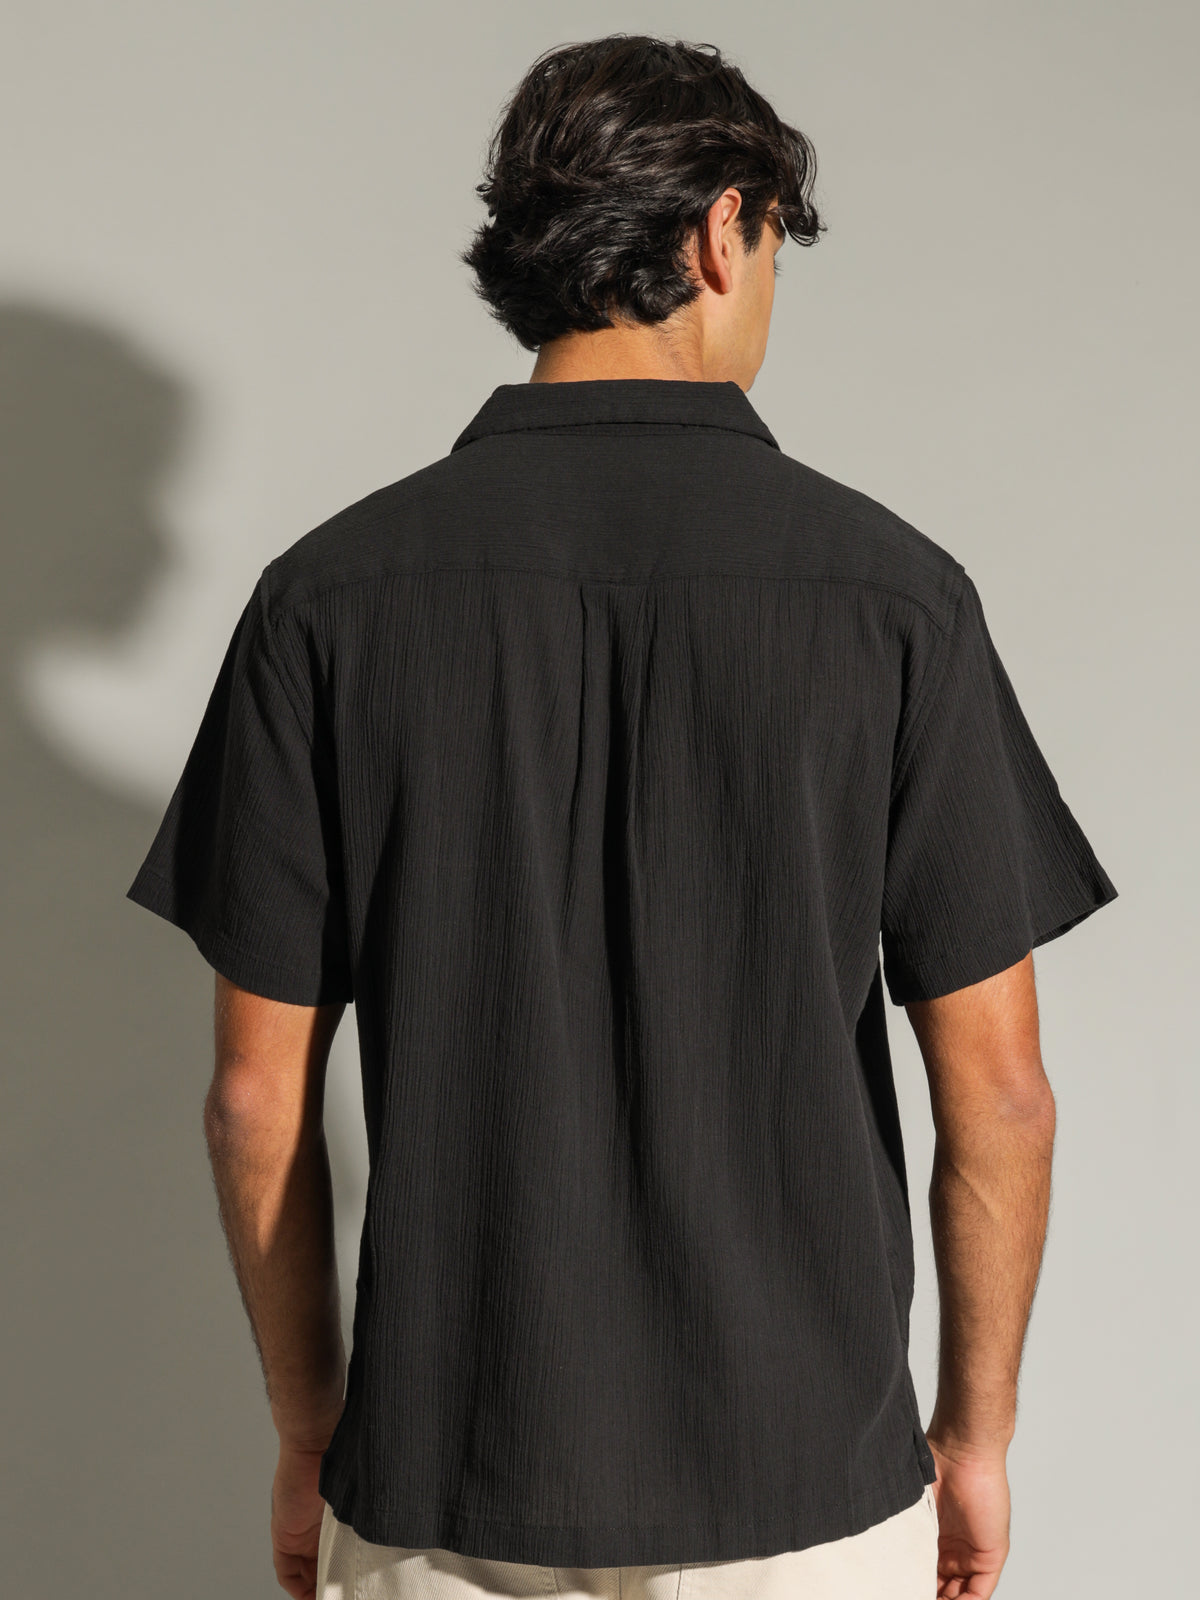 Osmond Shirt in Black